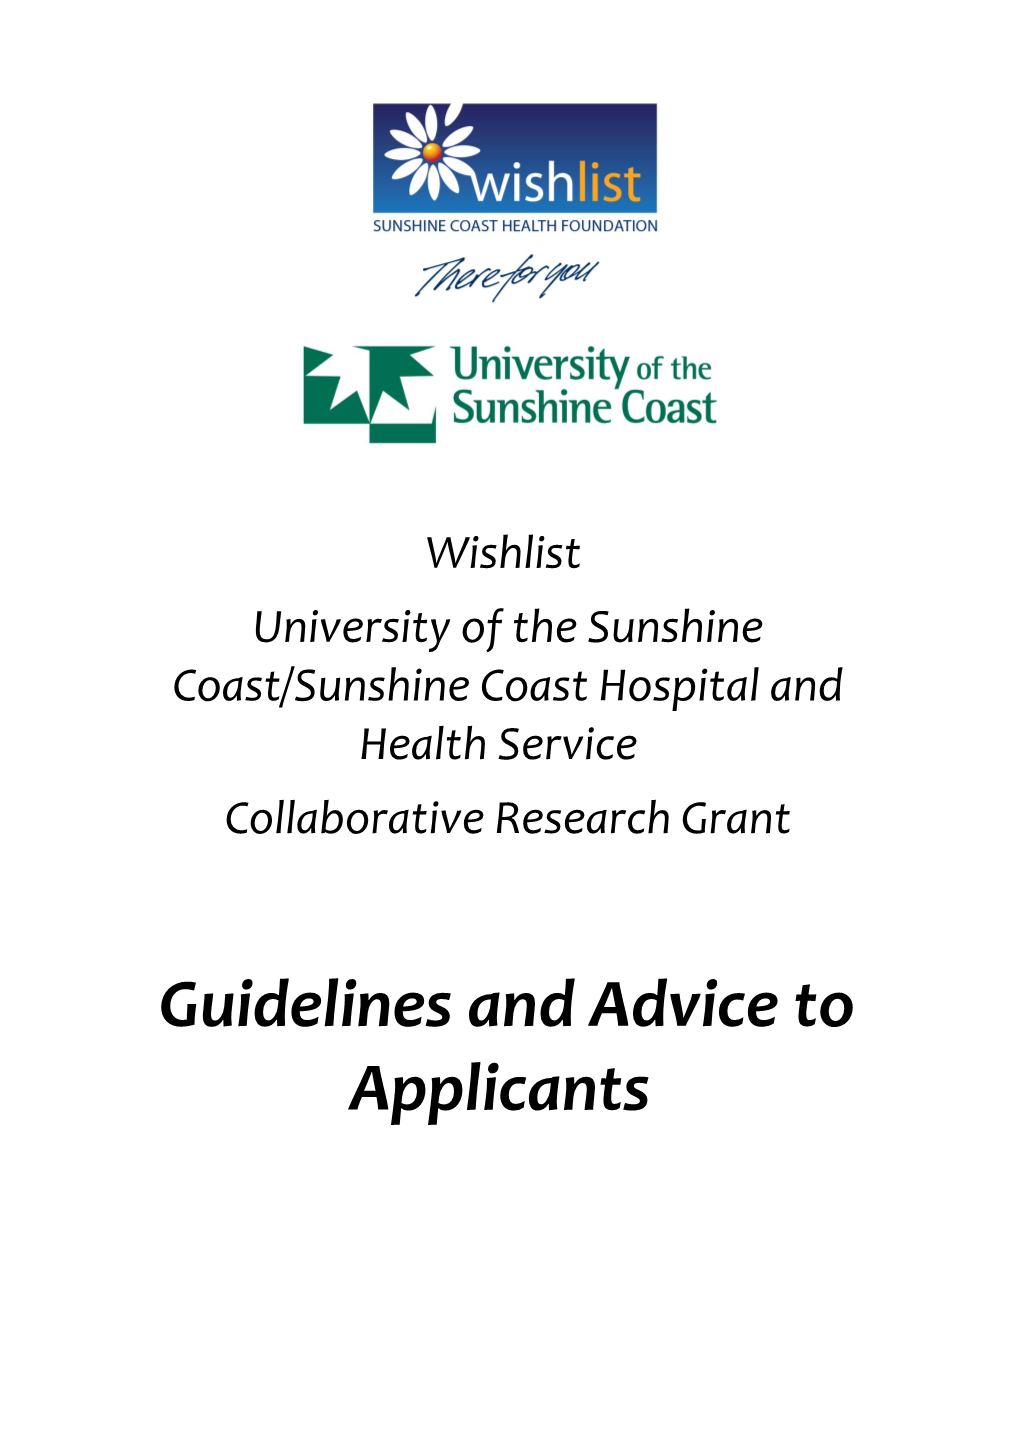 University of the Sunshine Coast/Sunshine Coast Hospital and Health Service